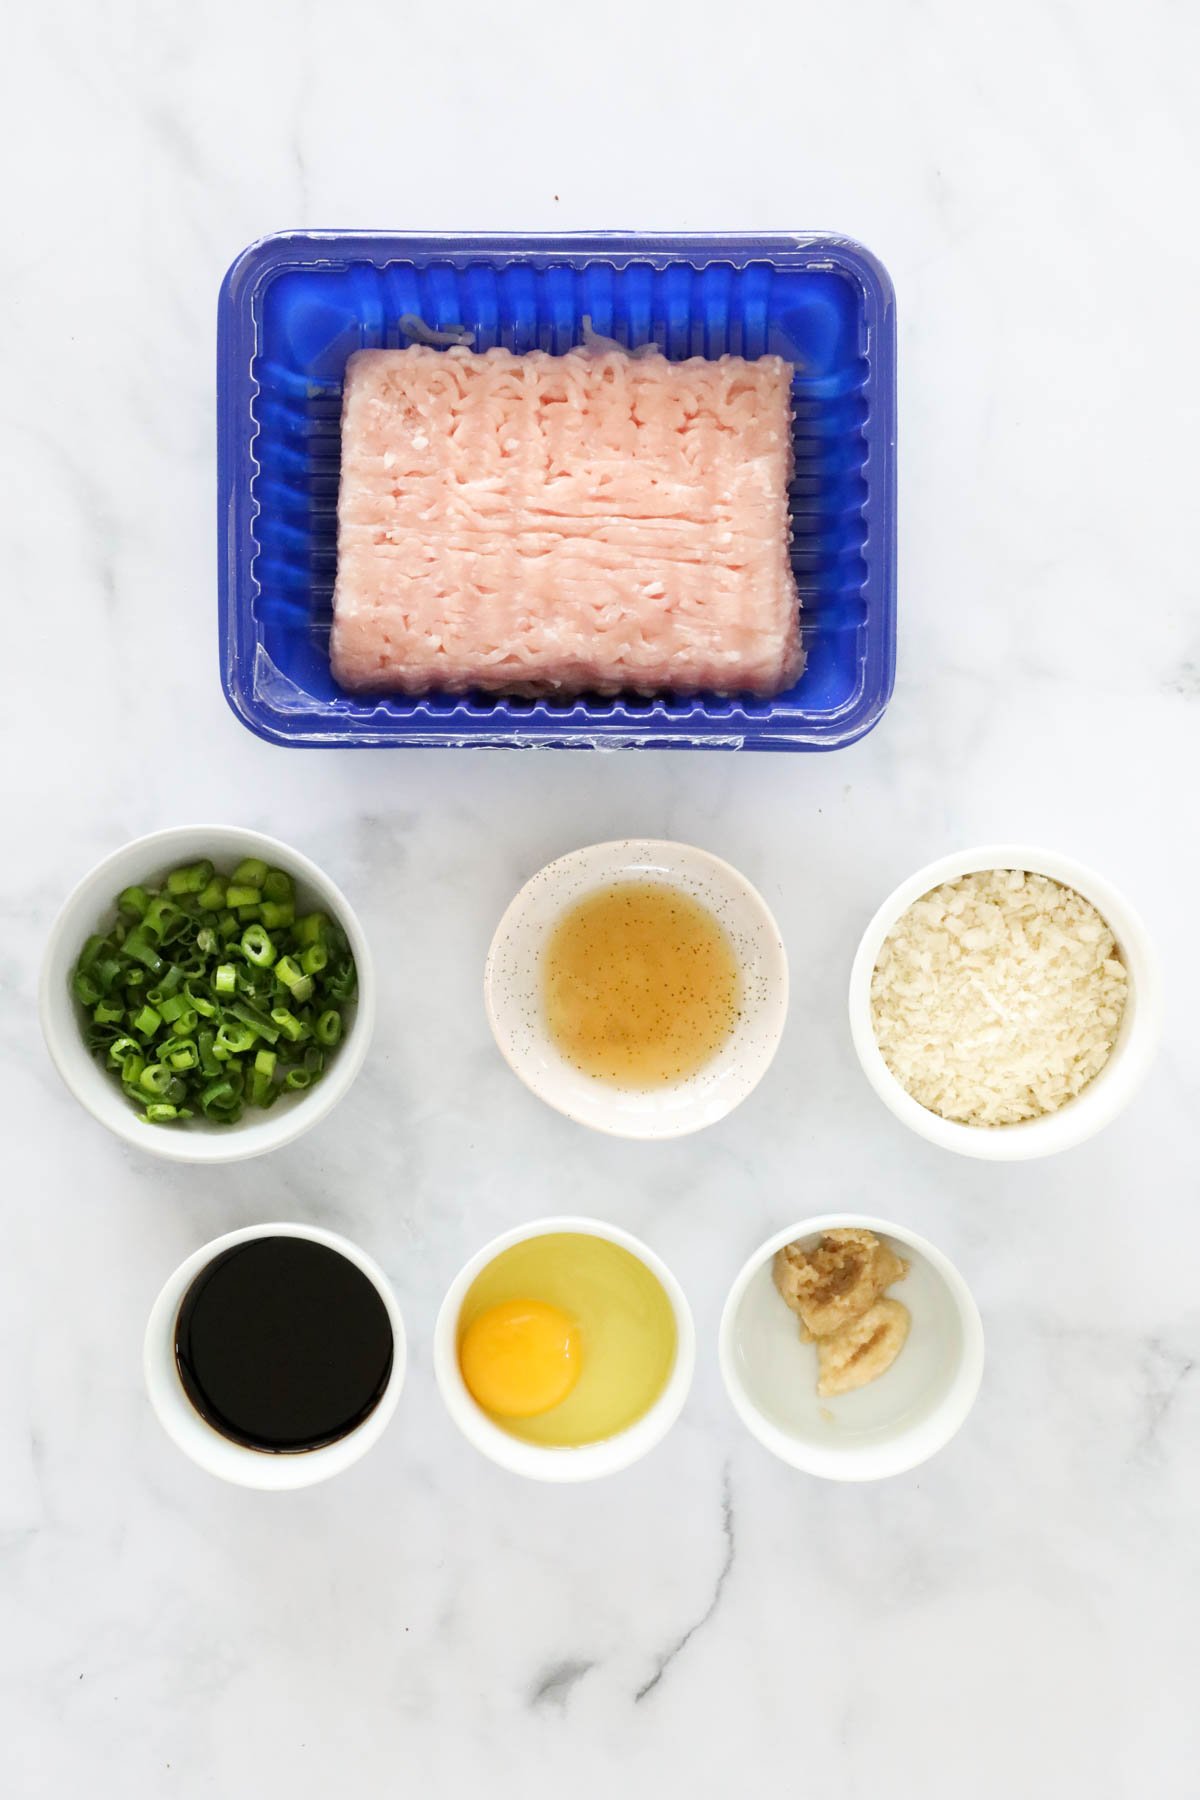 Ingredients for making asian turkey meatballs.